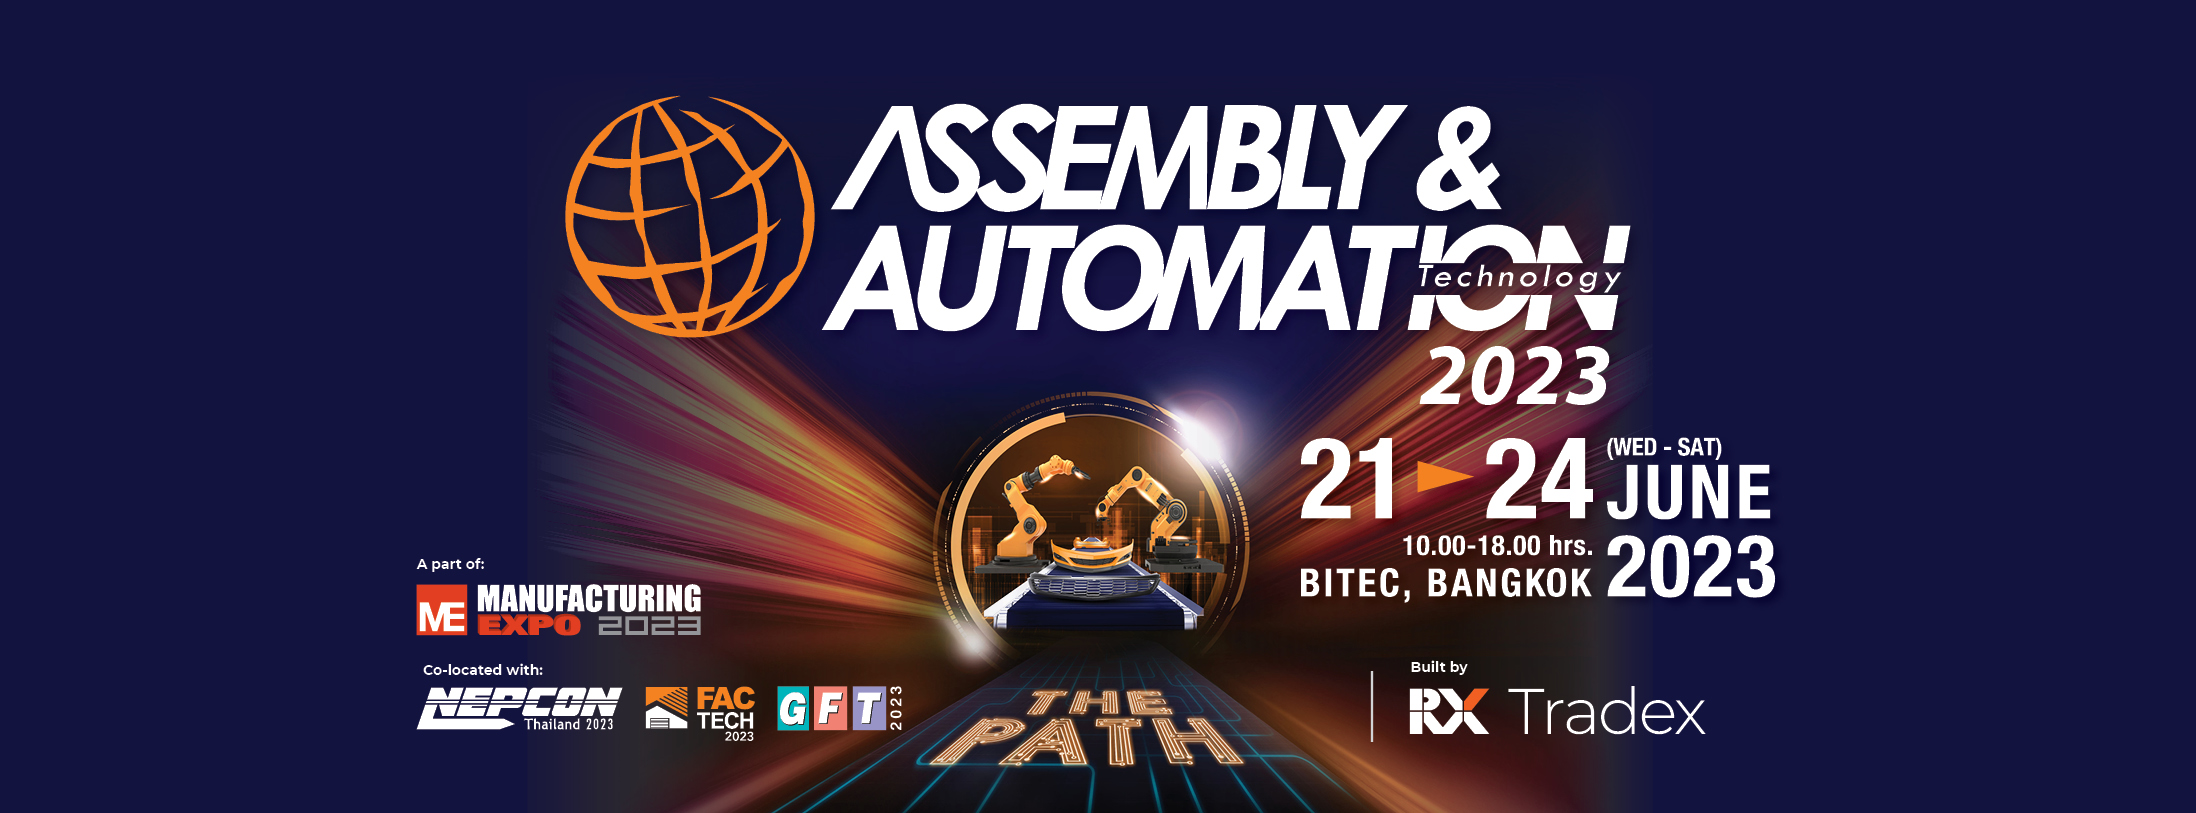 Assembly & Automation Technology 2023, Bangkok Thailand, Bangkok, Thailand